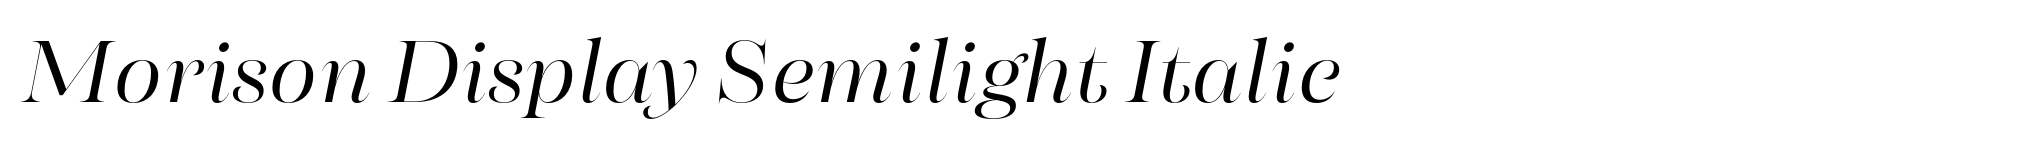 Morison Display Semilight Italic image